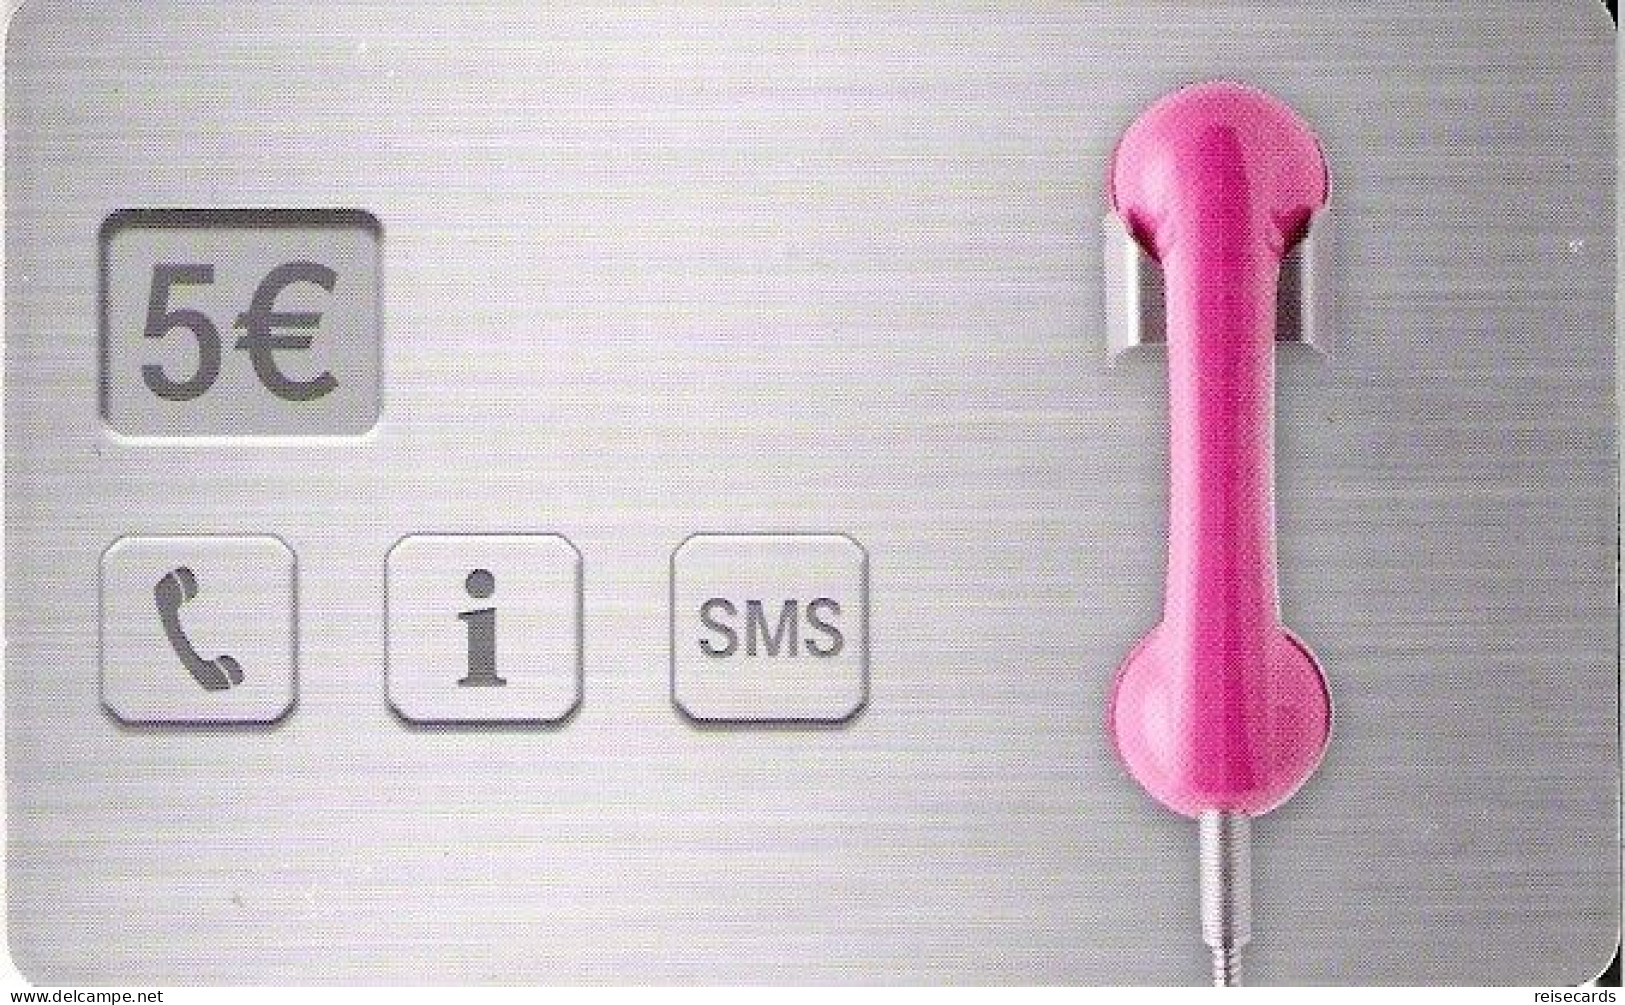 Germany: Telekom PD 01 10.07 Anruf Oder SMS, Bargeldlos - P & PD-Series : Taquilla De Telekom Alemania